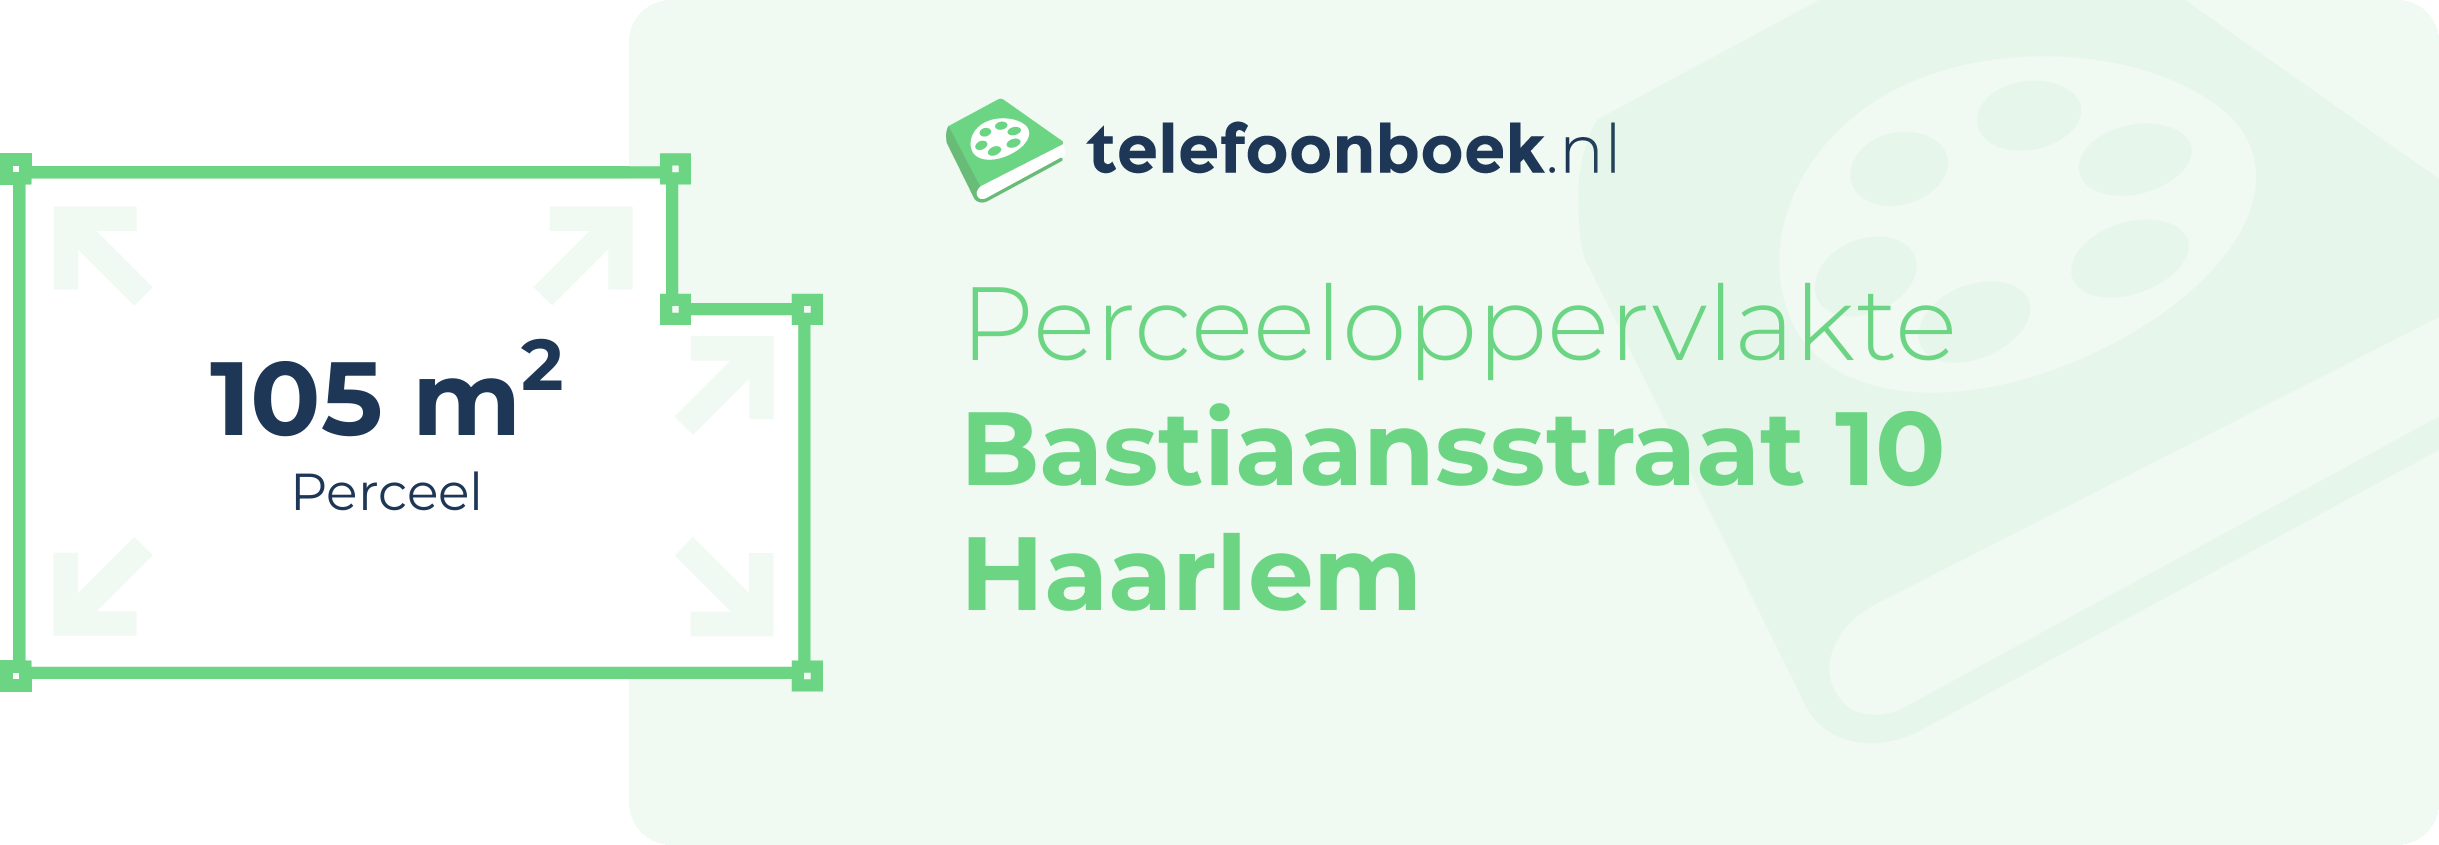 Perceeloppervlakte Bastiaansstraat 10 Haarlem